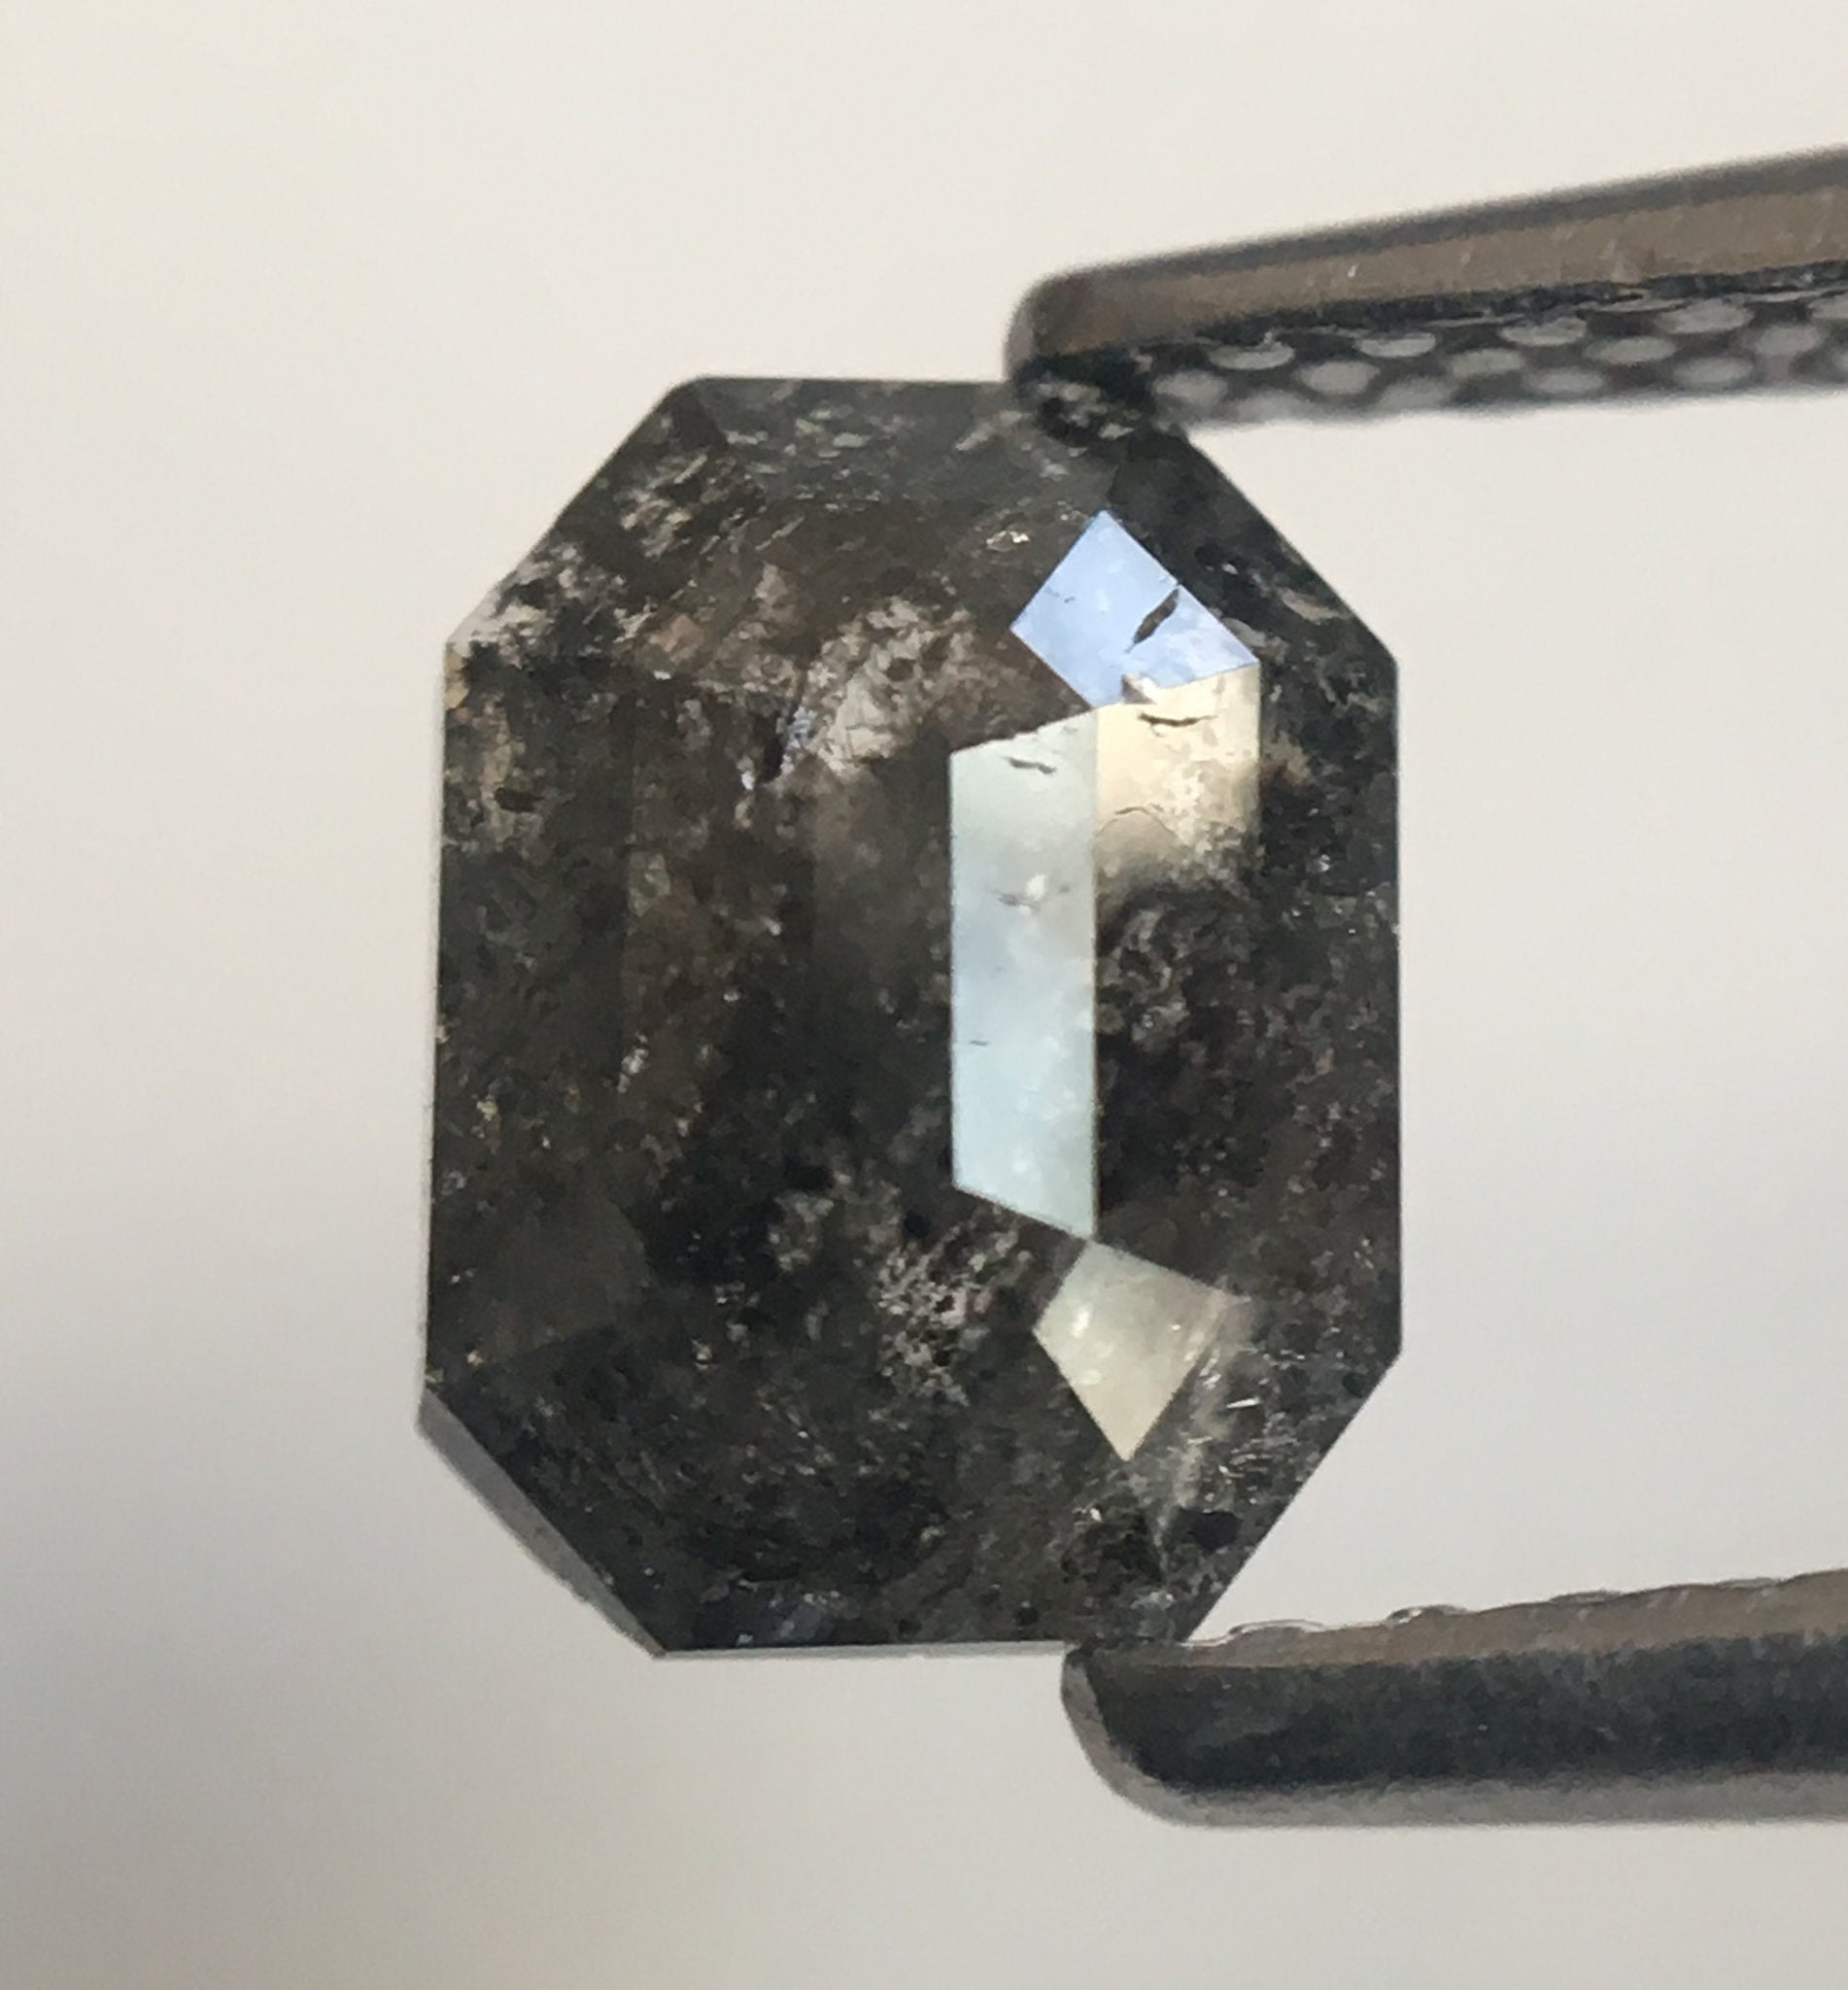 0.95 Ct Natural Dark Gray Emerald shape Loose Diamond, 6.86 m x 5.08 mm x 2.40 mm Emerald shape natural loose diamond for jewelry AJ14/54